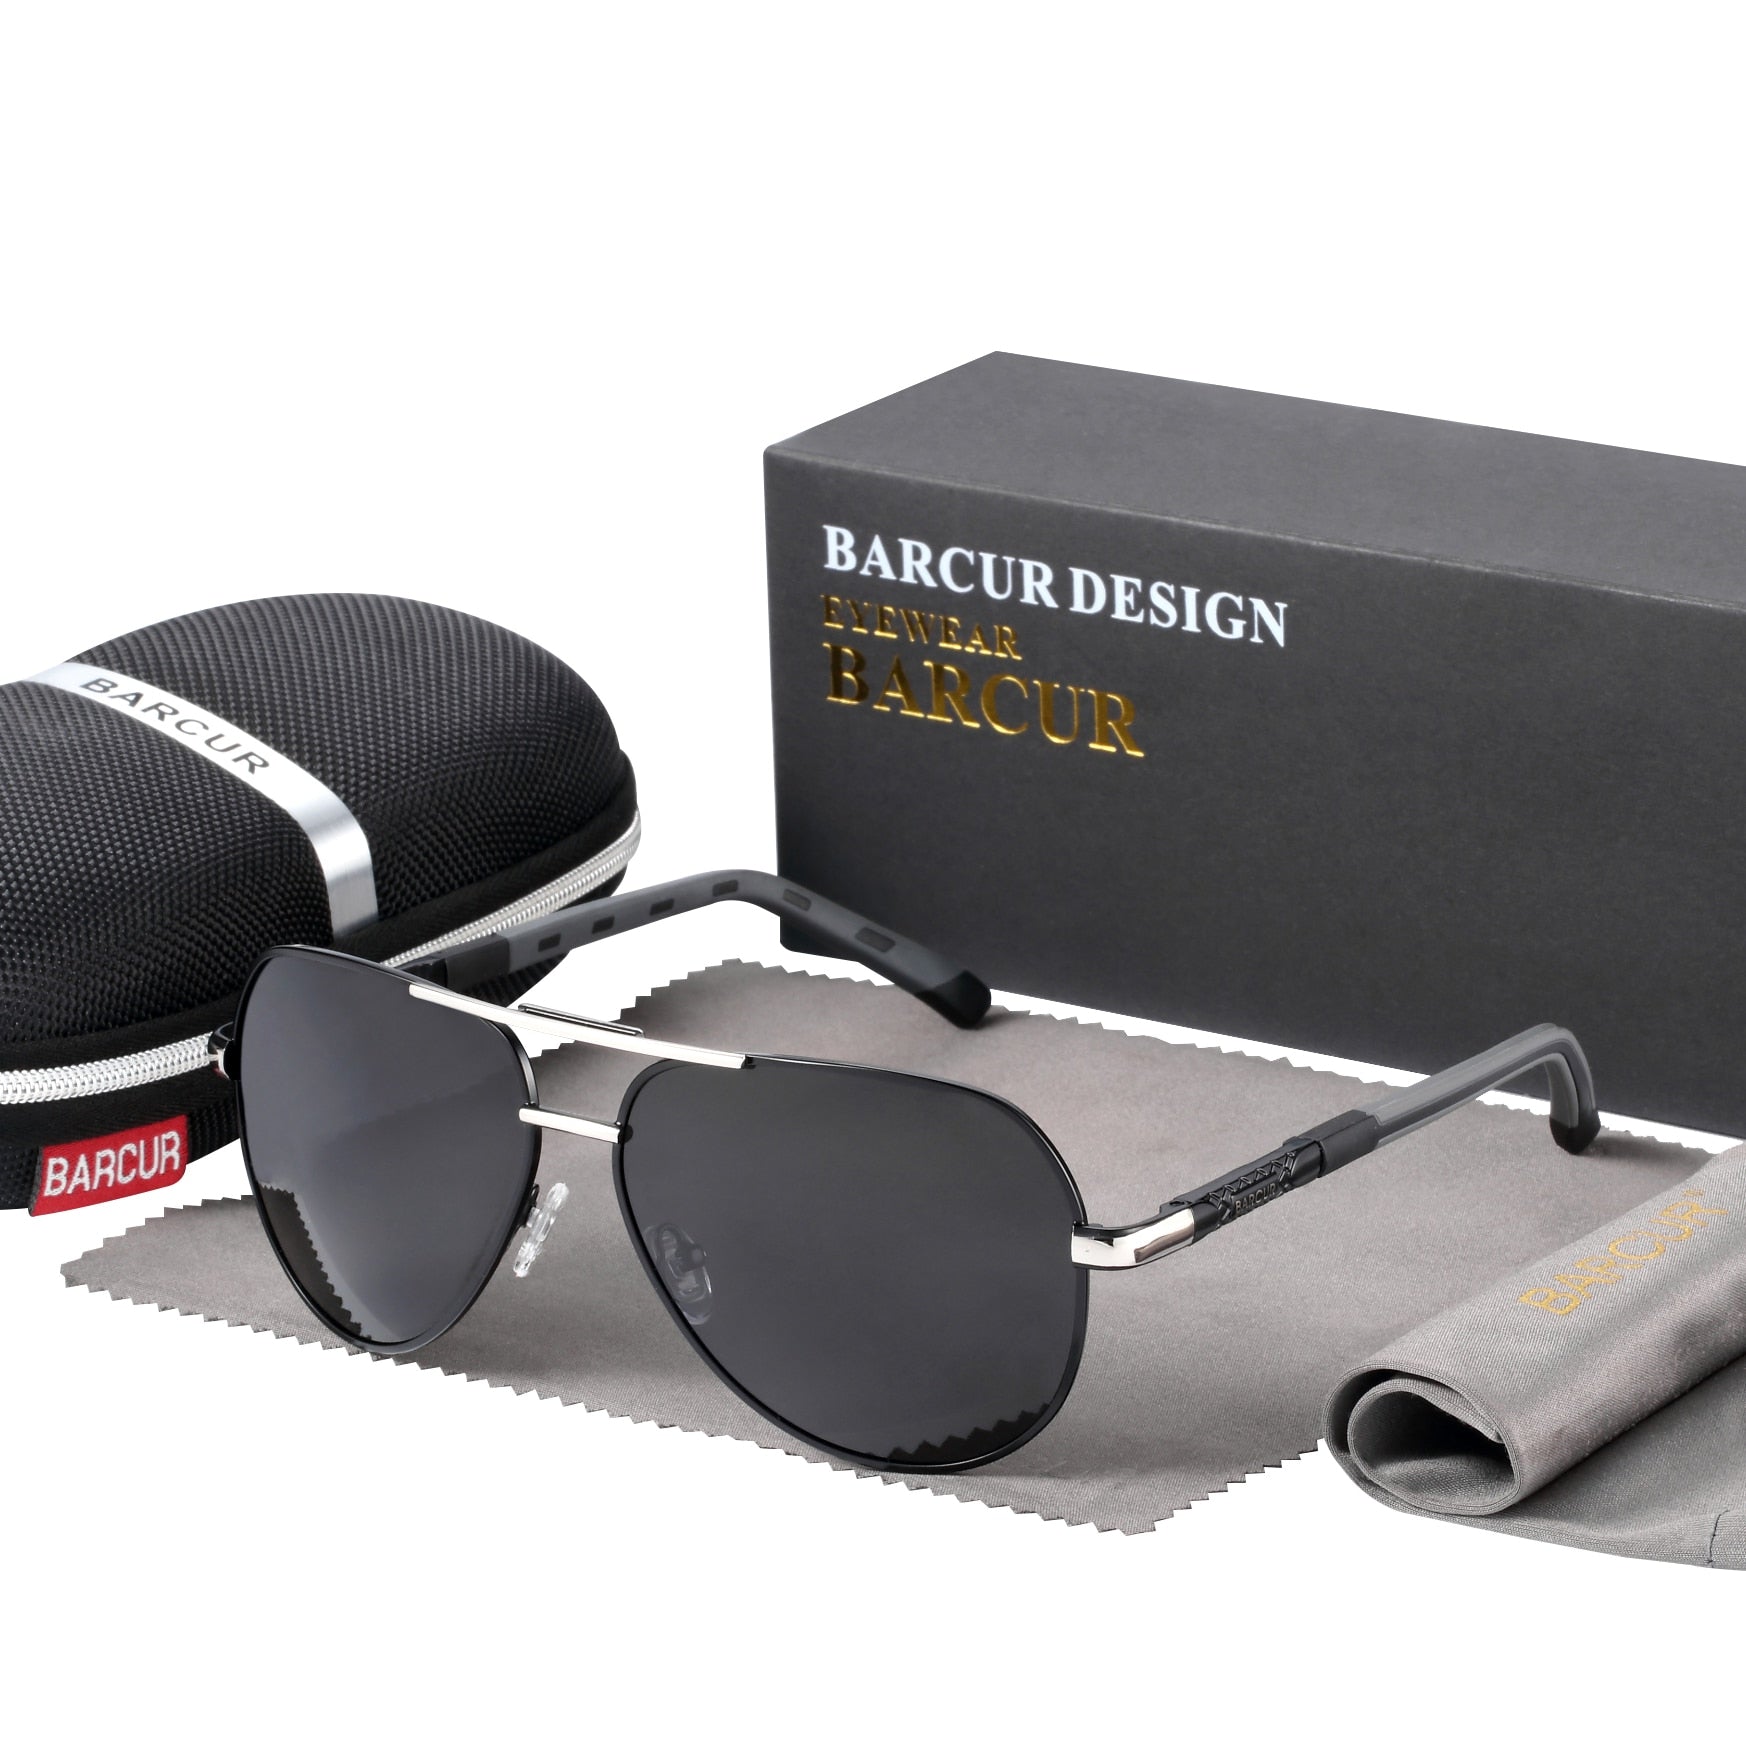 Black and silver Barcur Vintage Aviator sunglasses